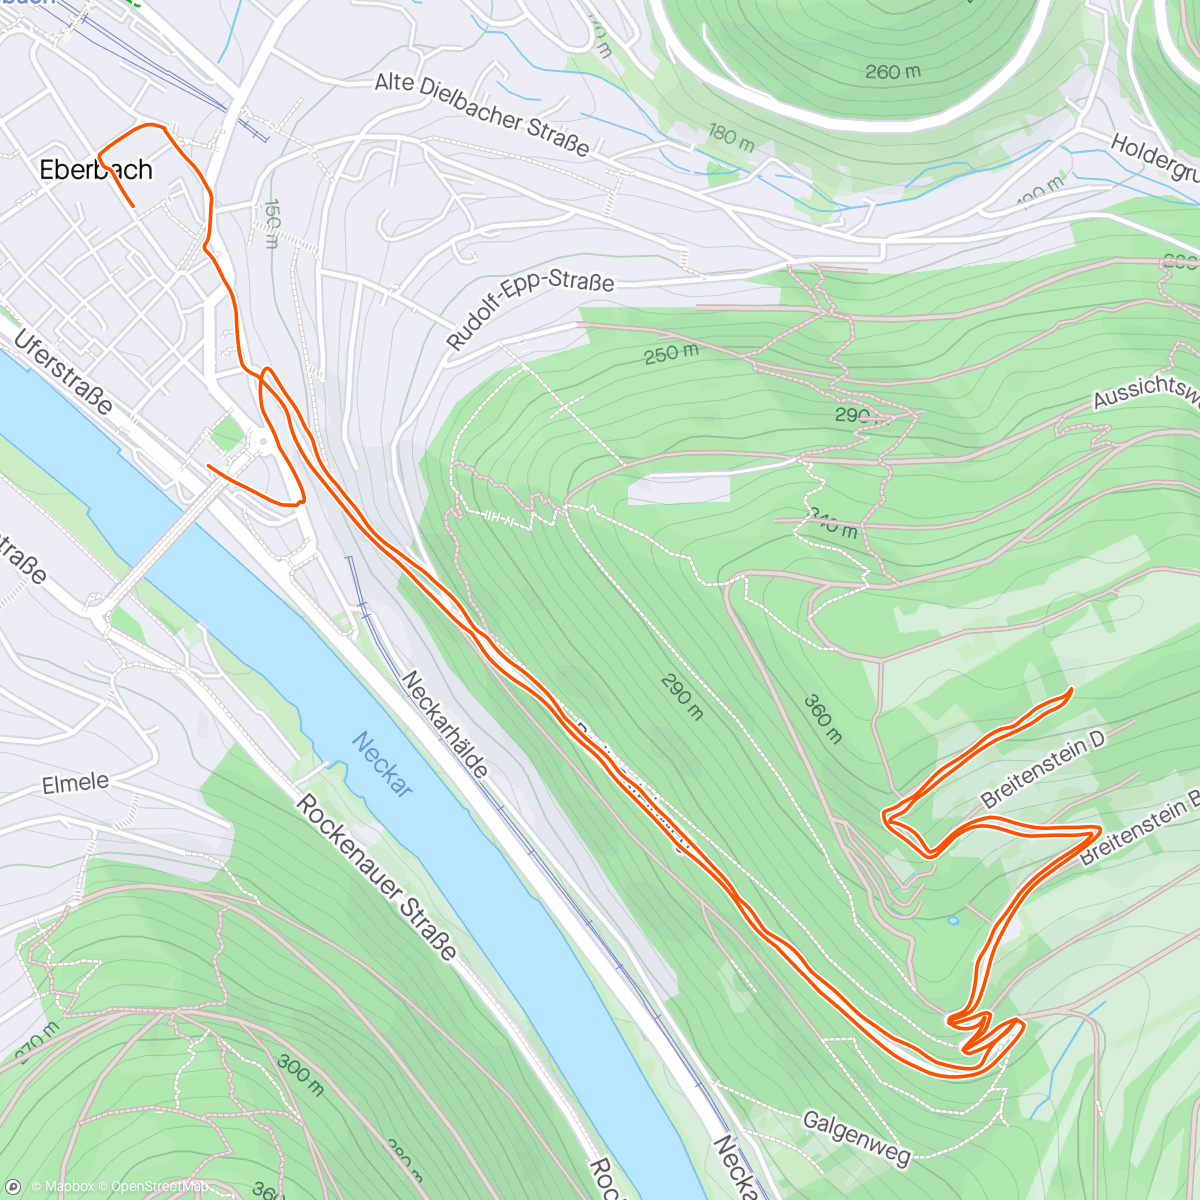 Map of the activity, Laufen im Eberbach 😀